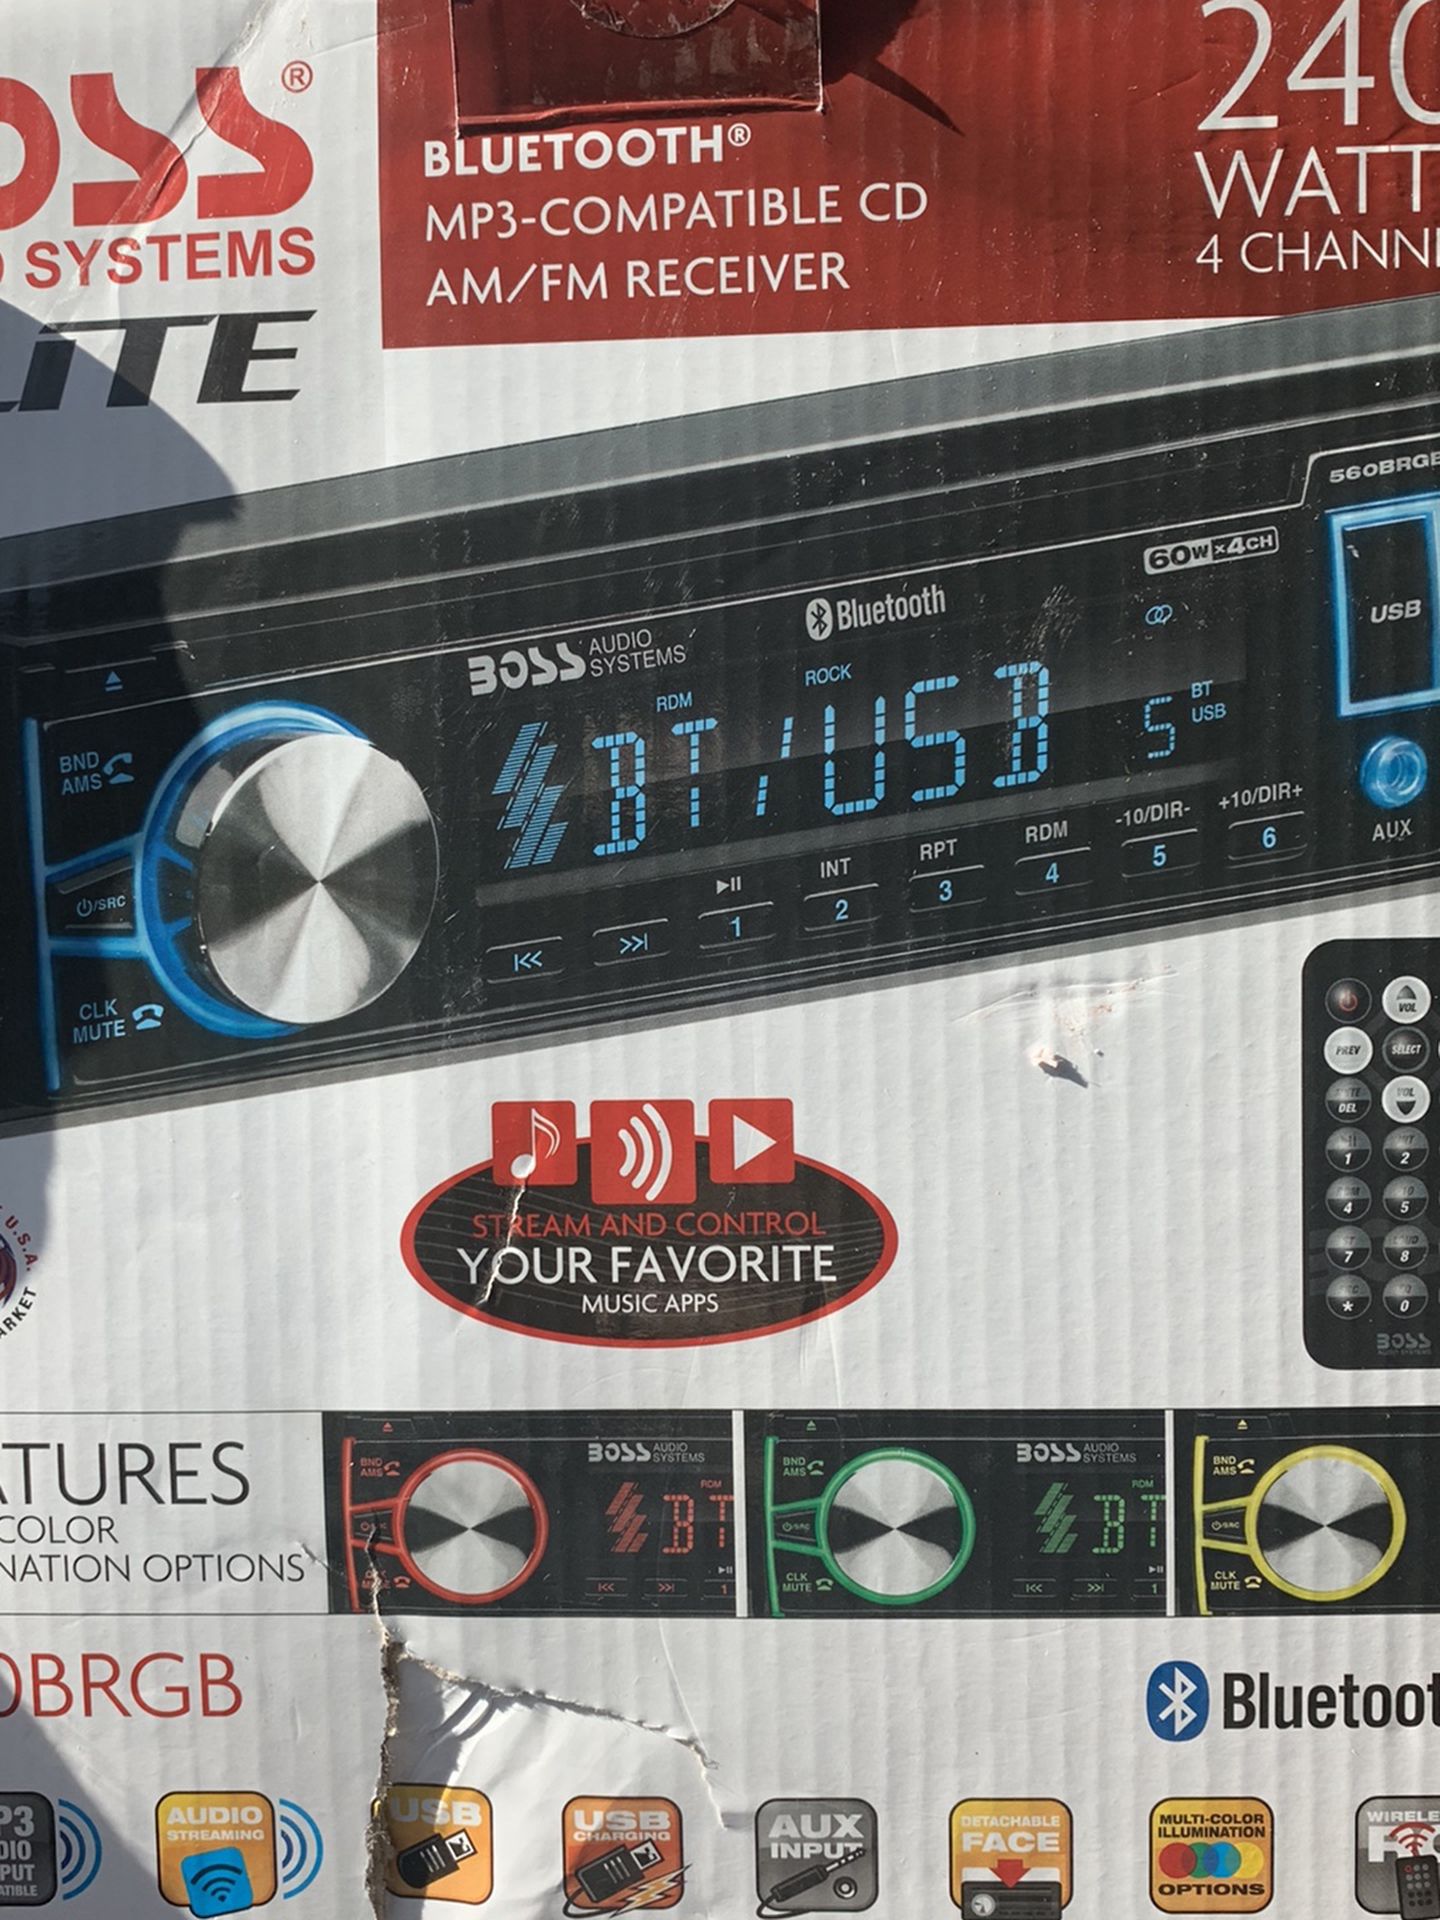 BOSS Audio Systems Elite 560BRGB Car Stereo